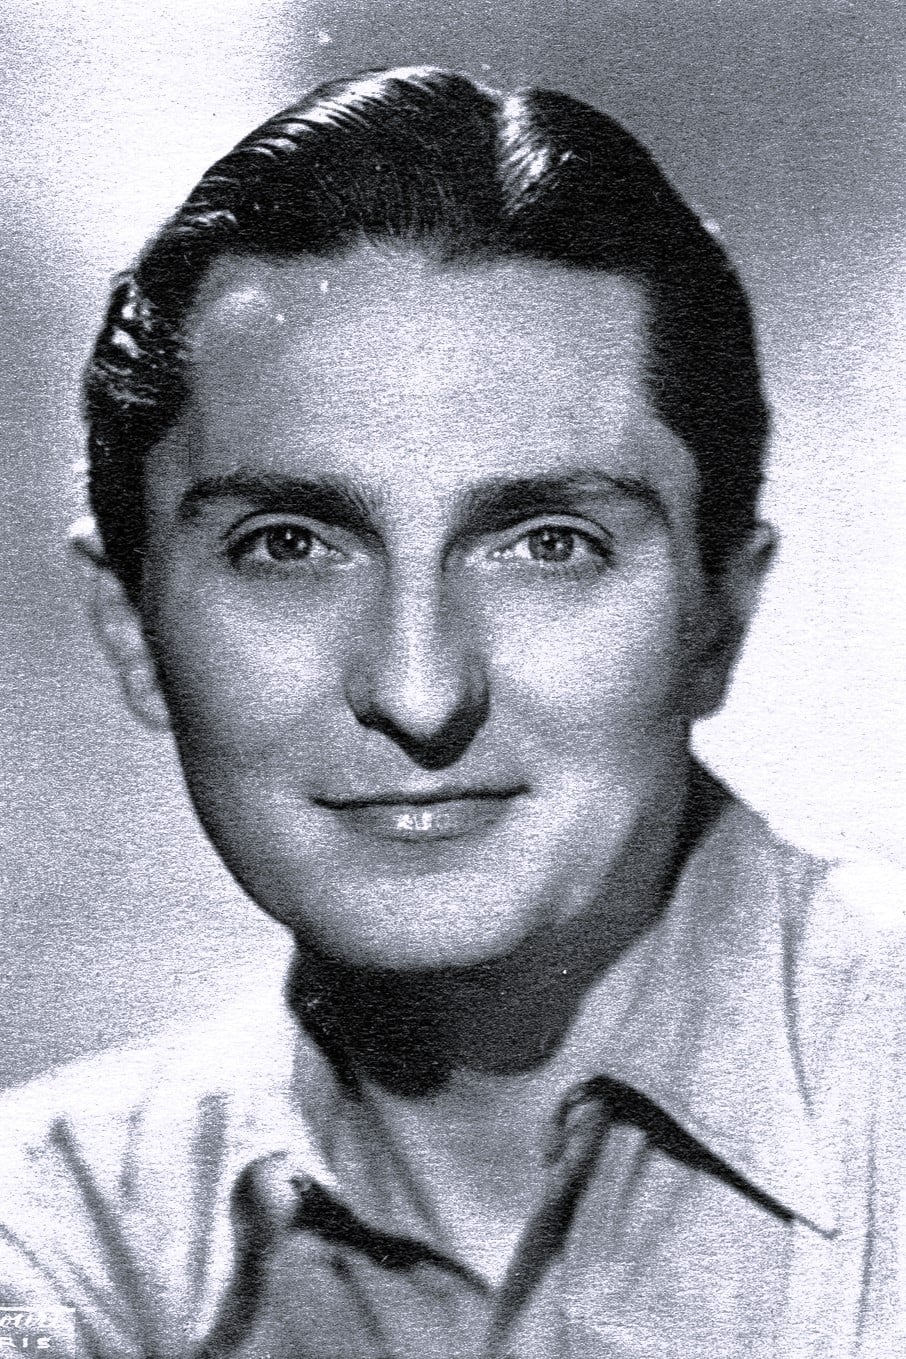 Roger Tréville